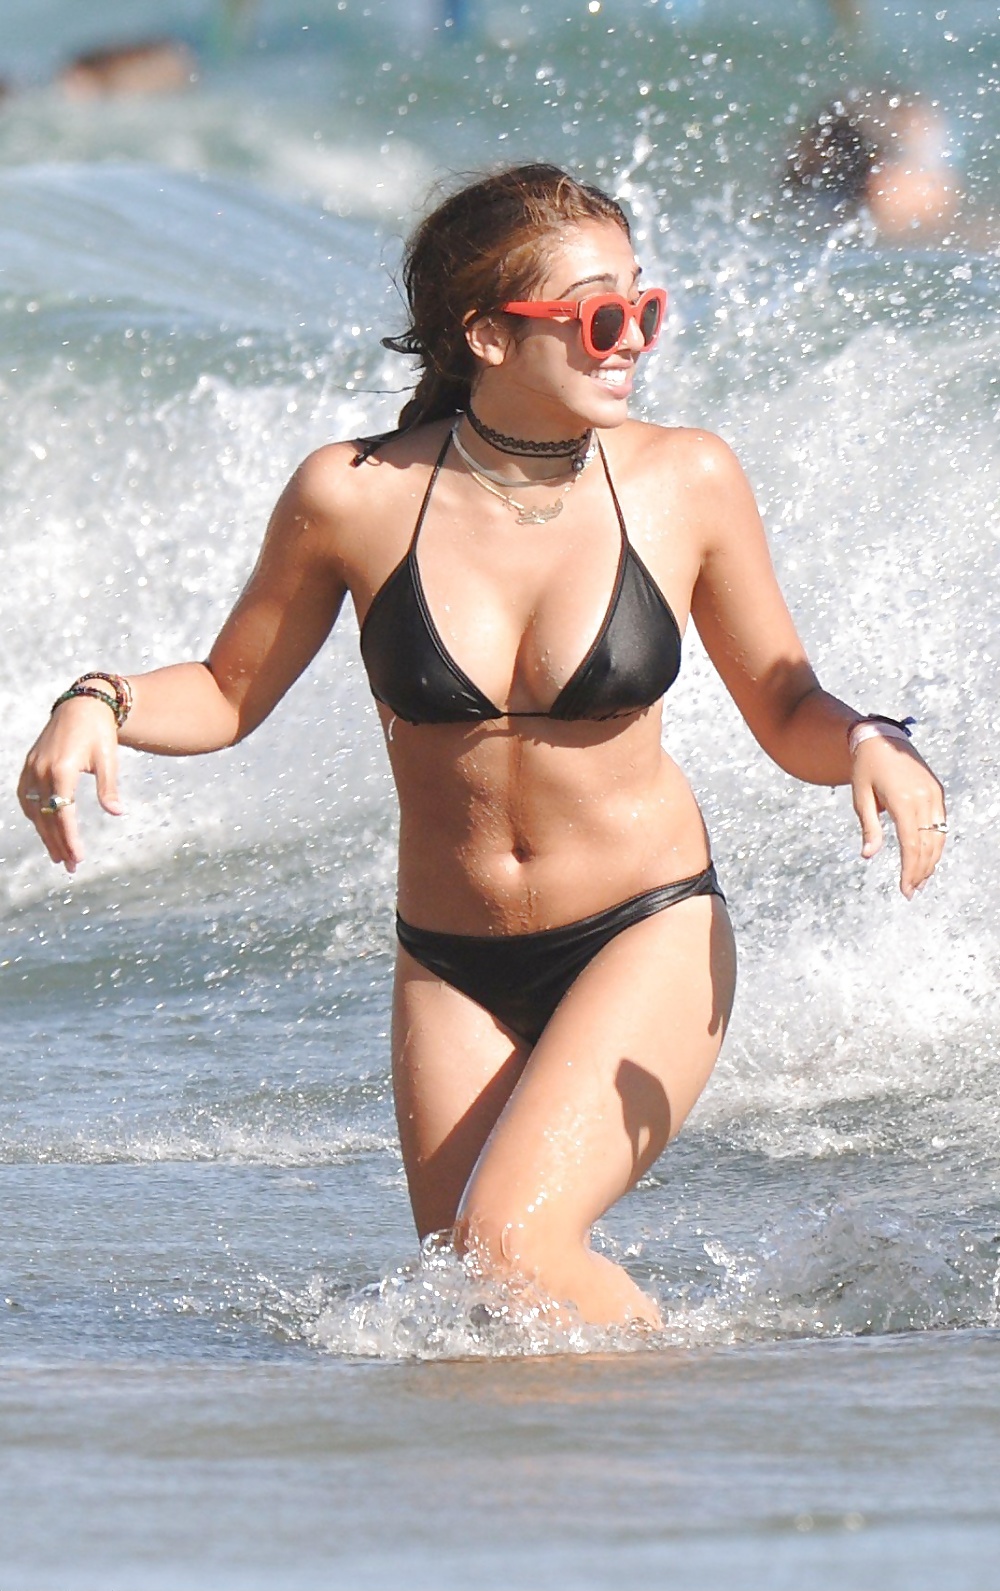 Lourdes leon - bikini a cannes, parte 4, agosto 2014
 #32989607